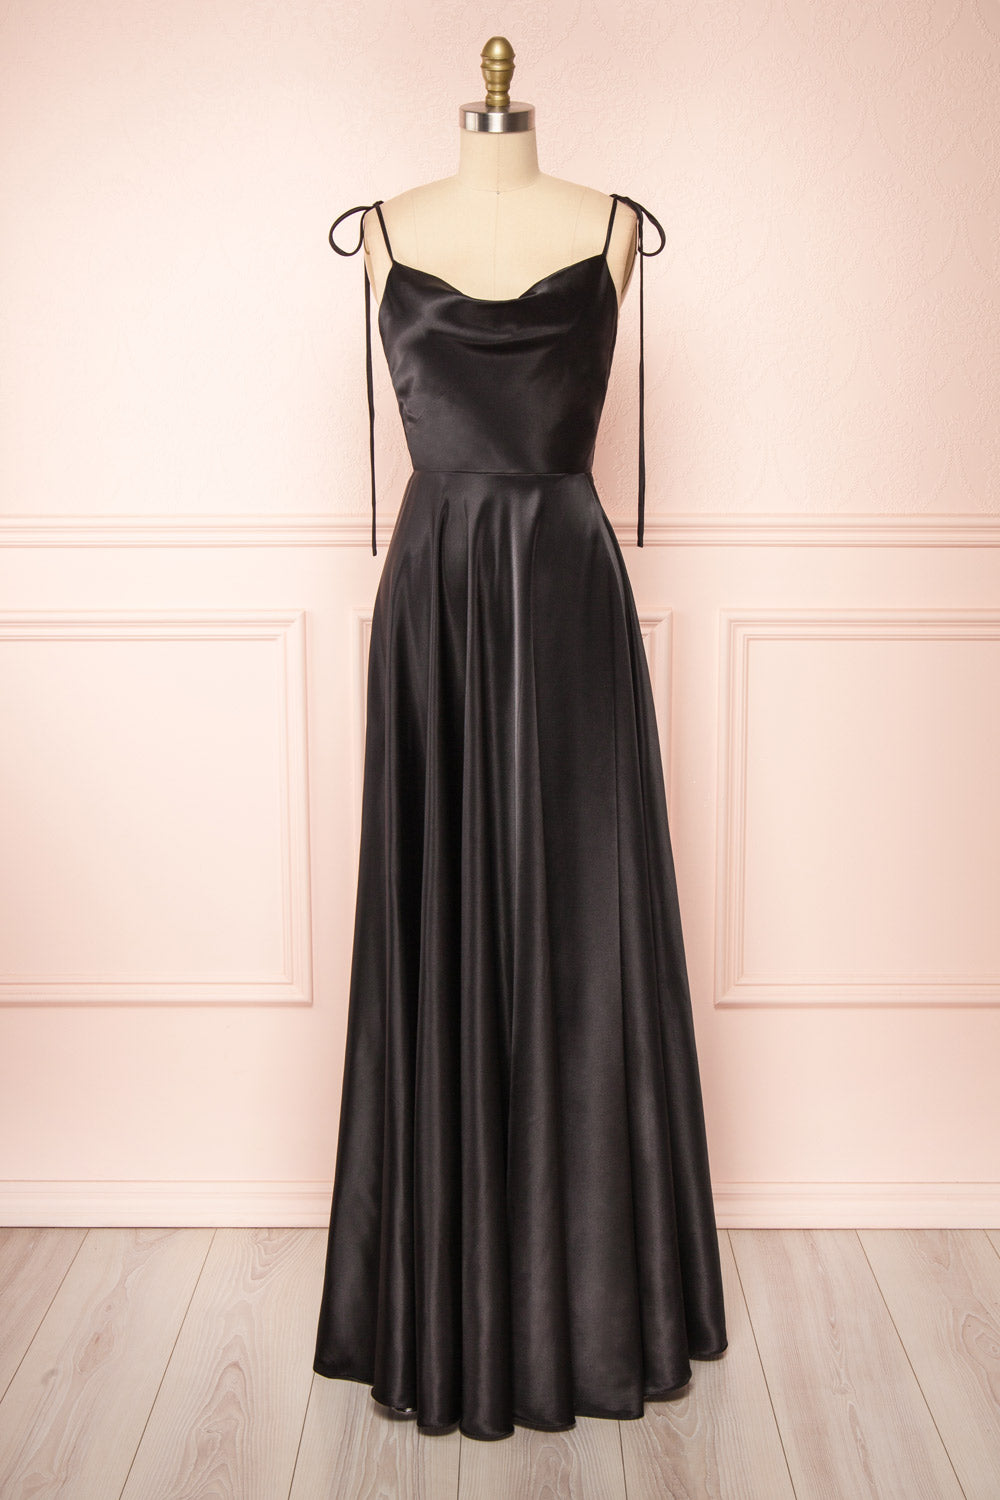 Moira Black Cowl Neck Satin Maxi Dress w/ High Slit | Boutique 1861 front view